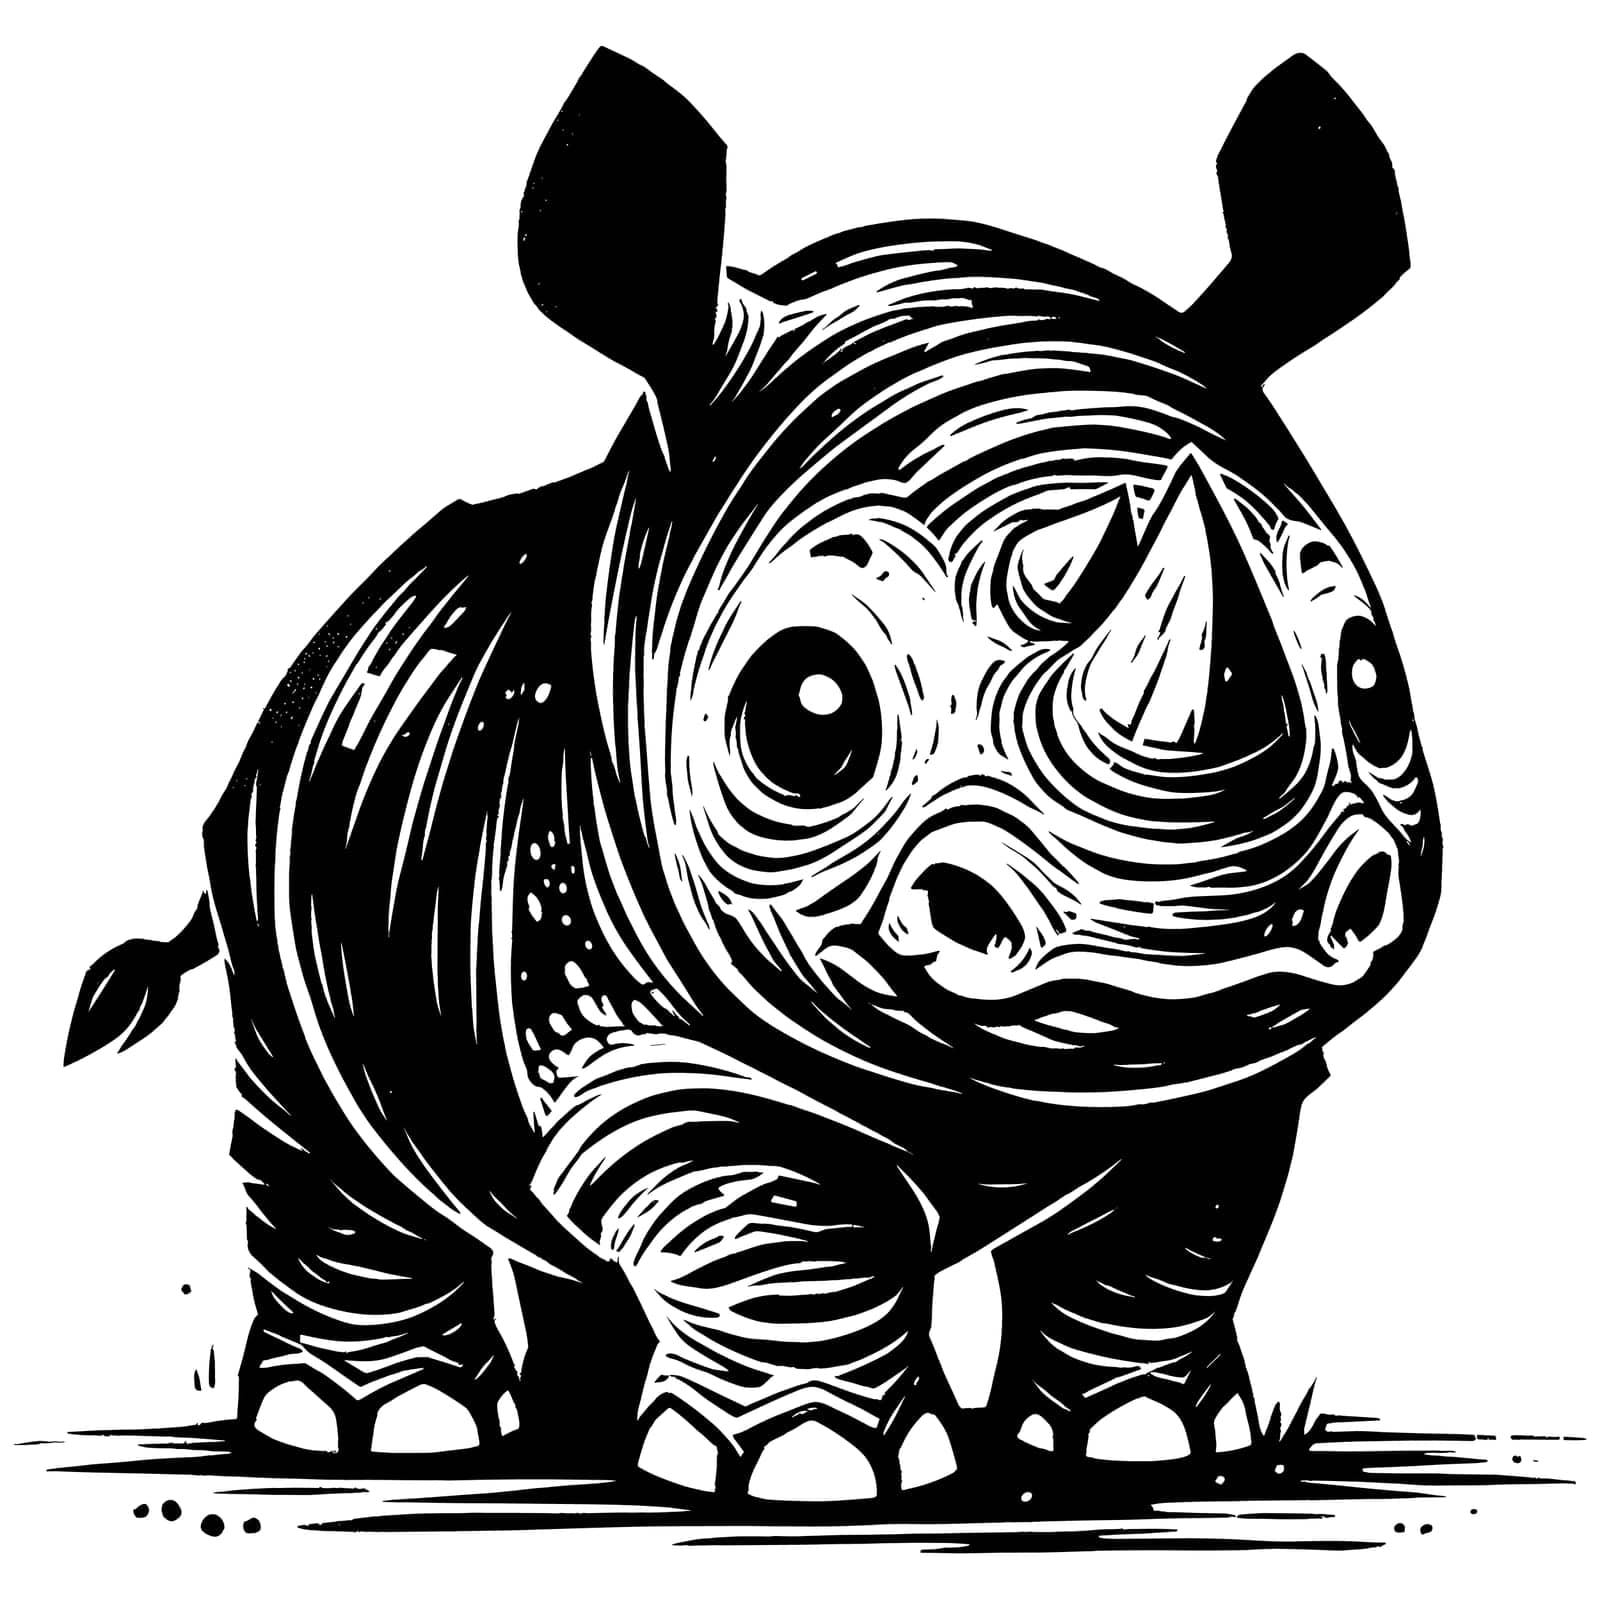 Woodcut style illustration of cute baby rhinoceros on white background.